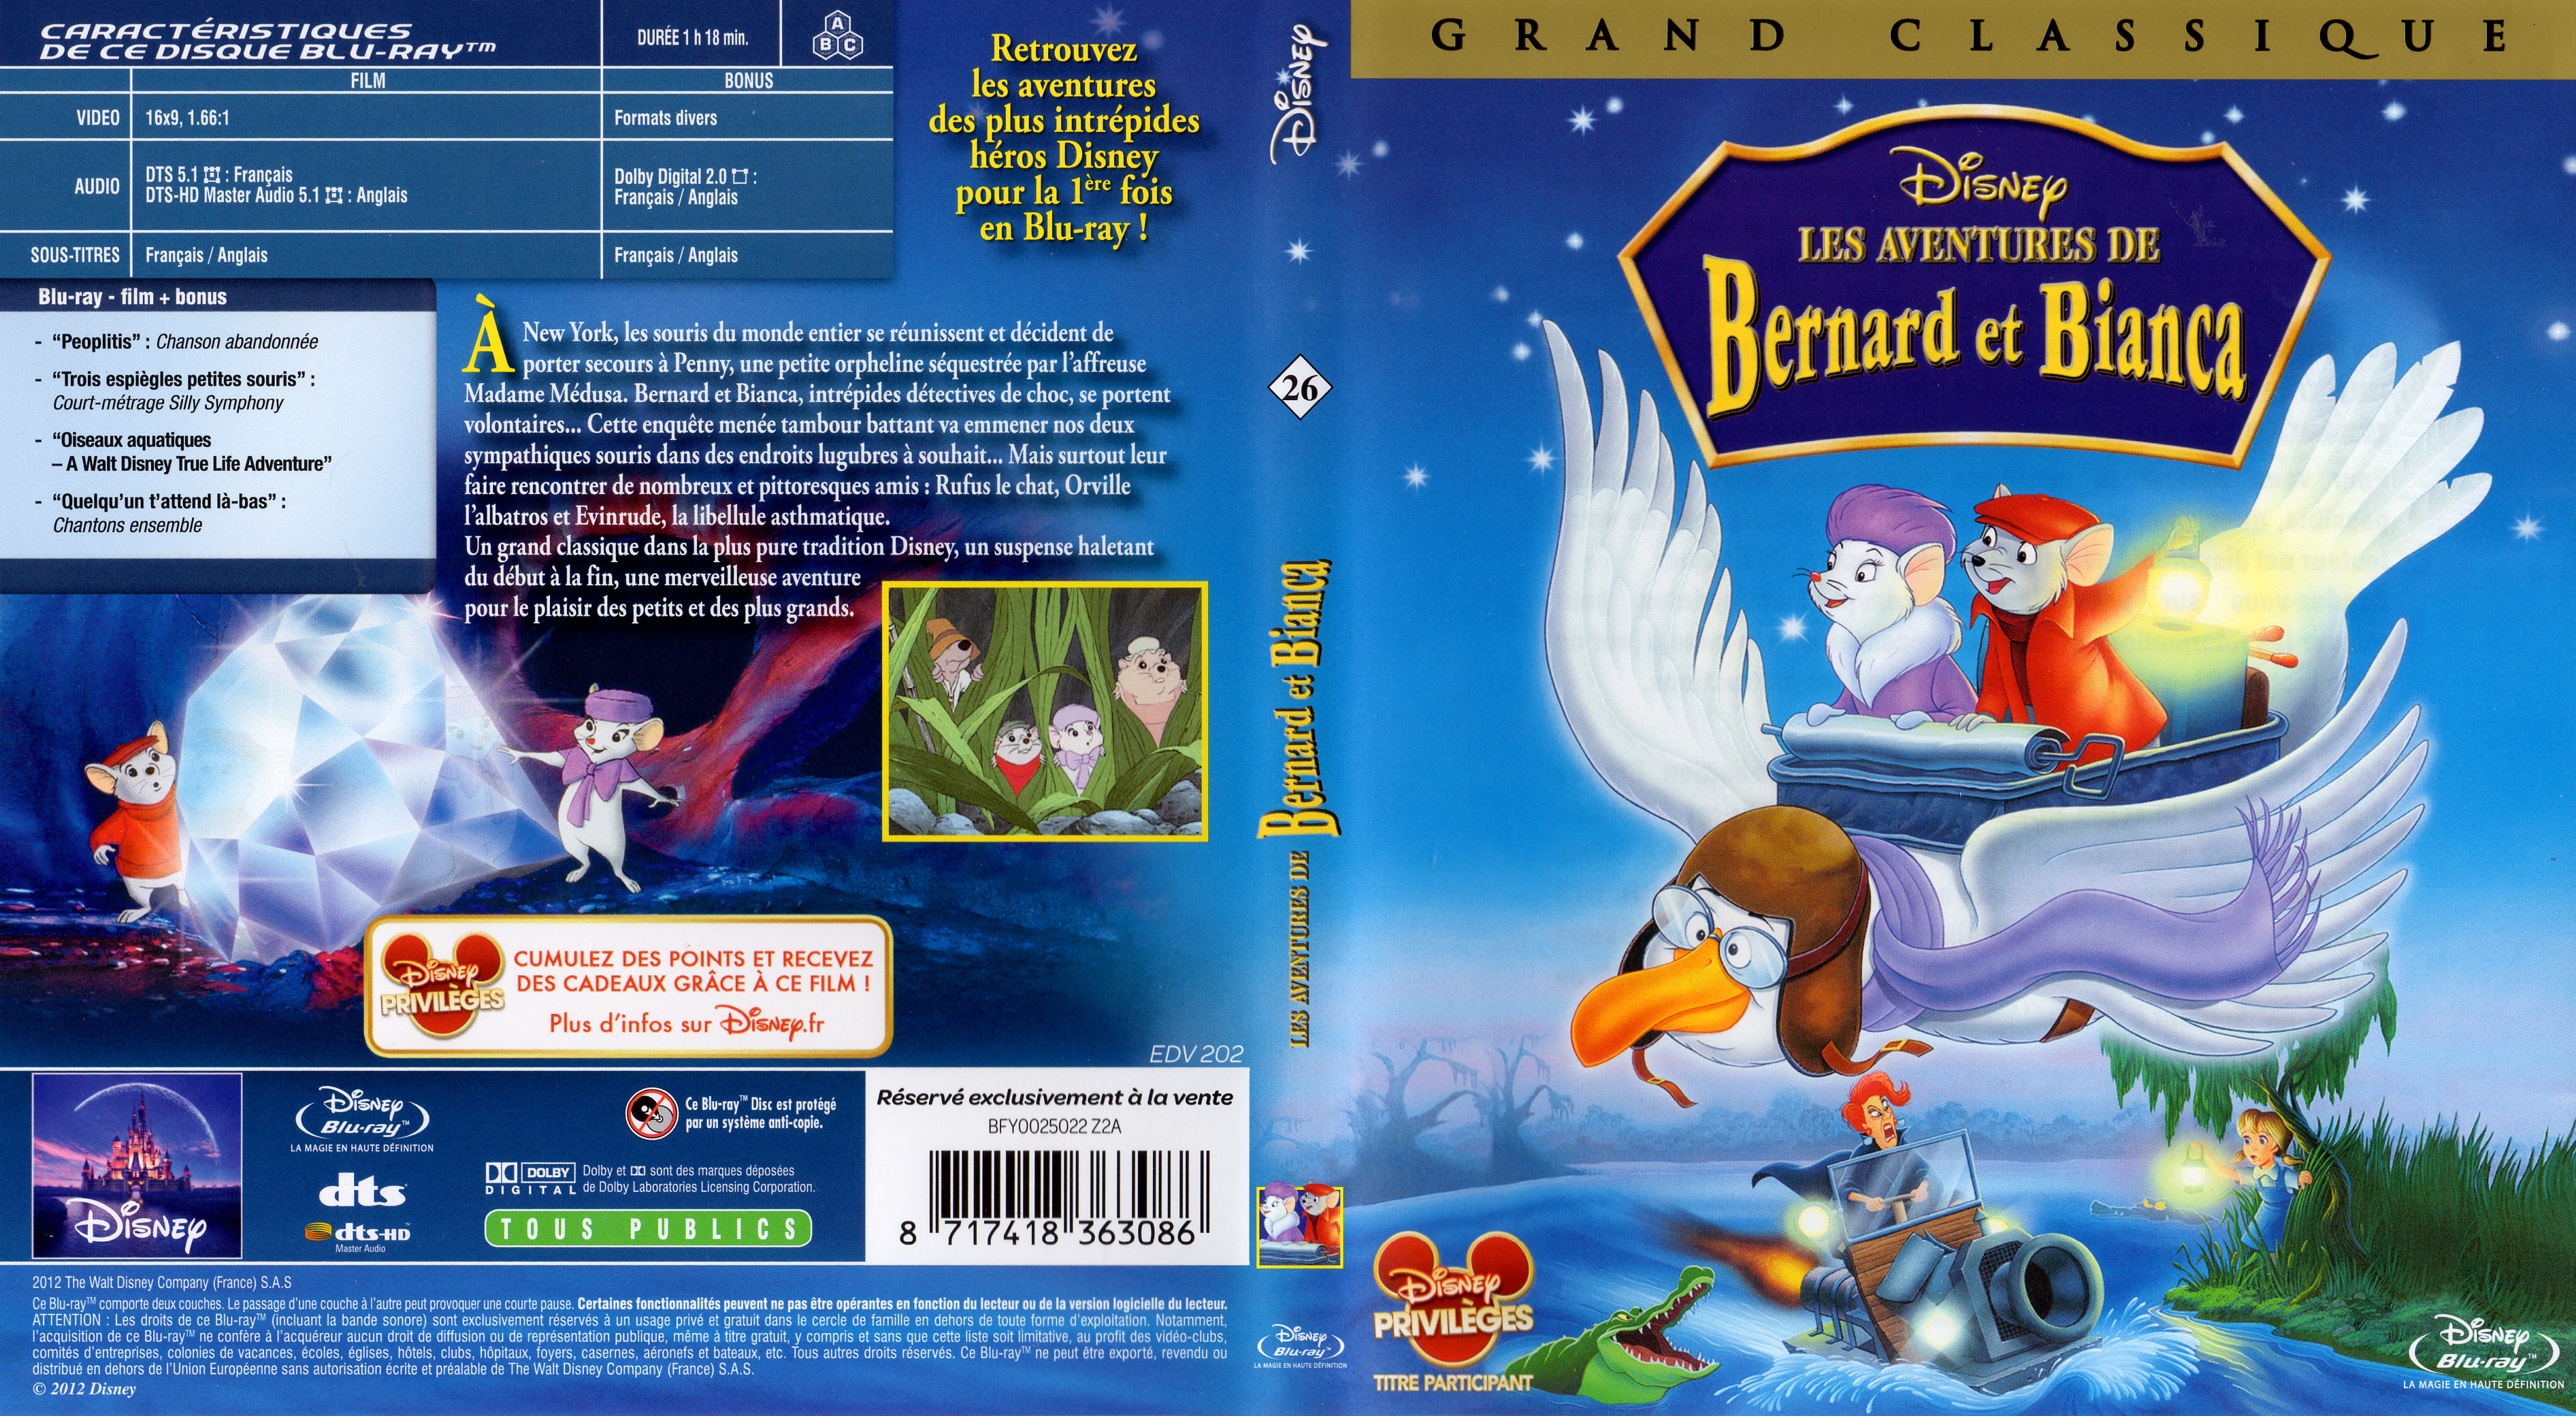 Jaquette DVD Les aventures de Bernard et Bianca (BLU-RAY)